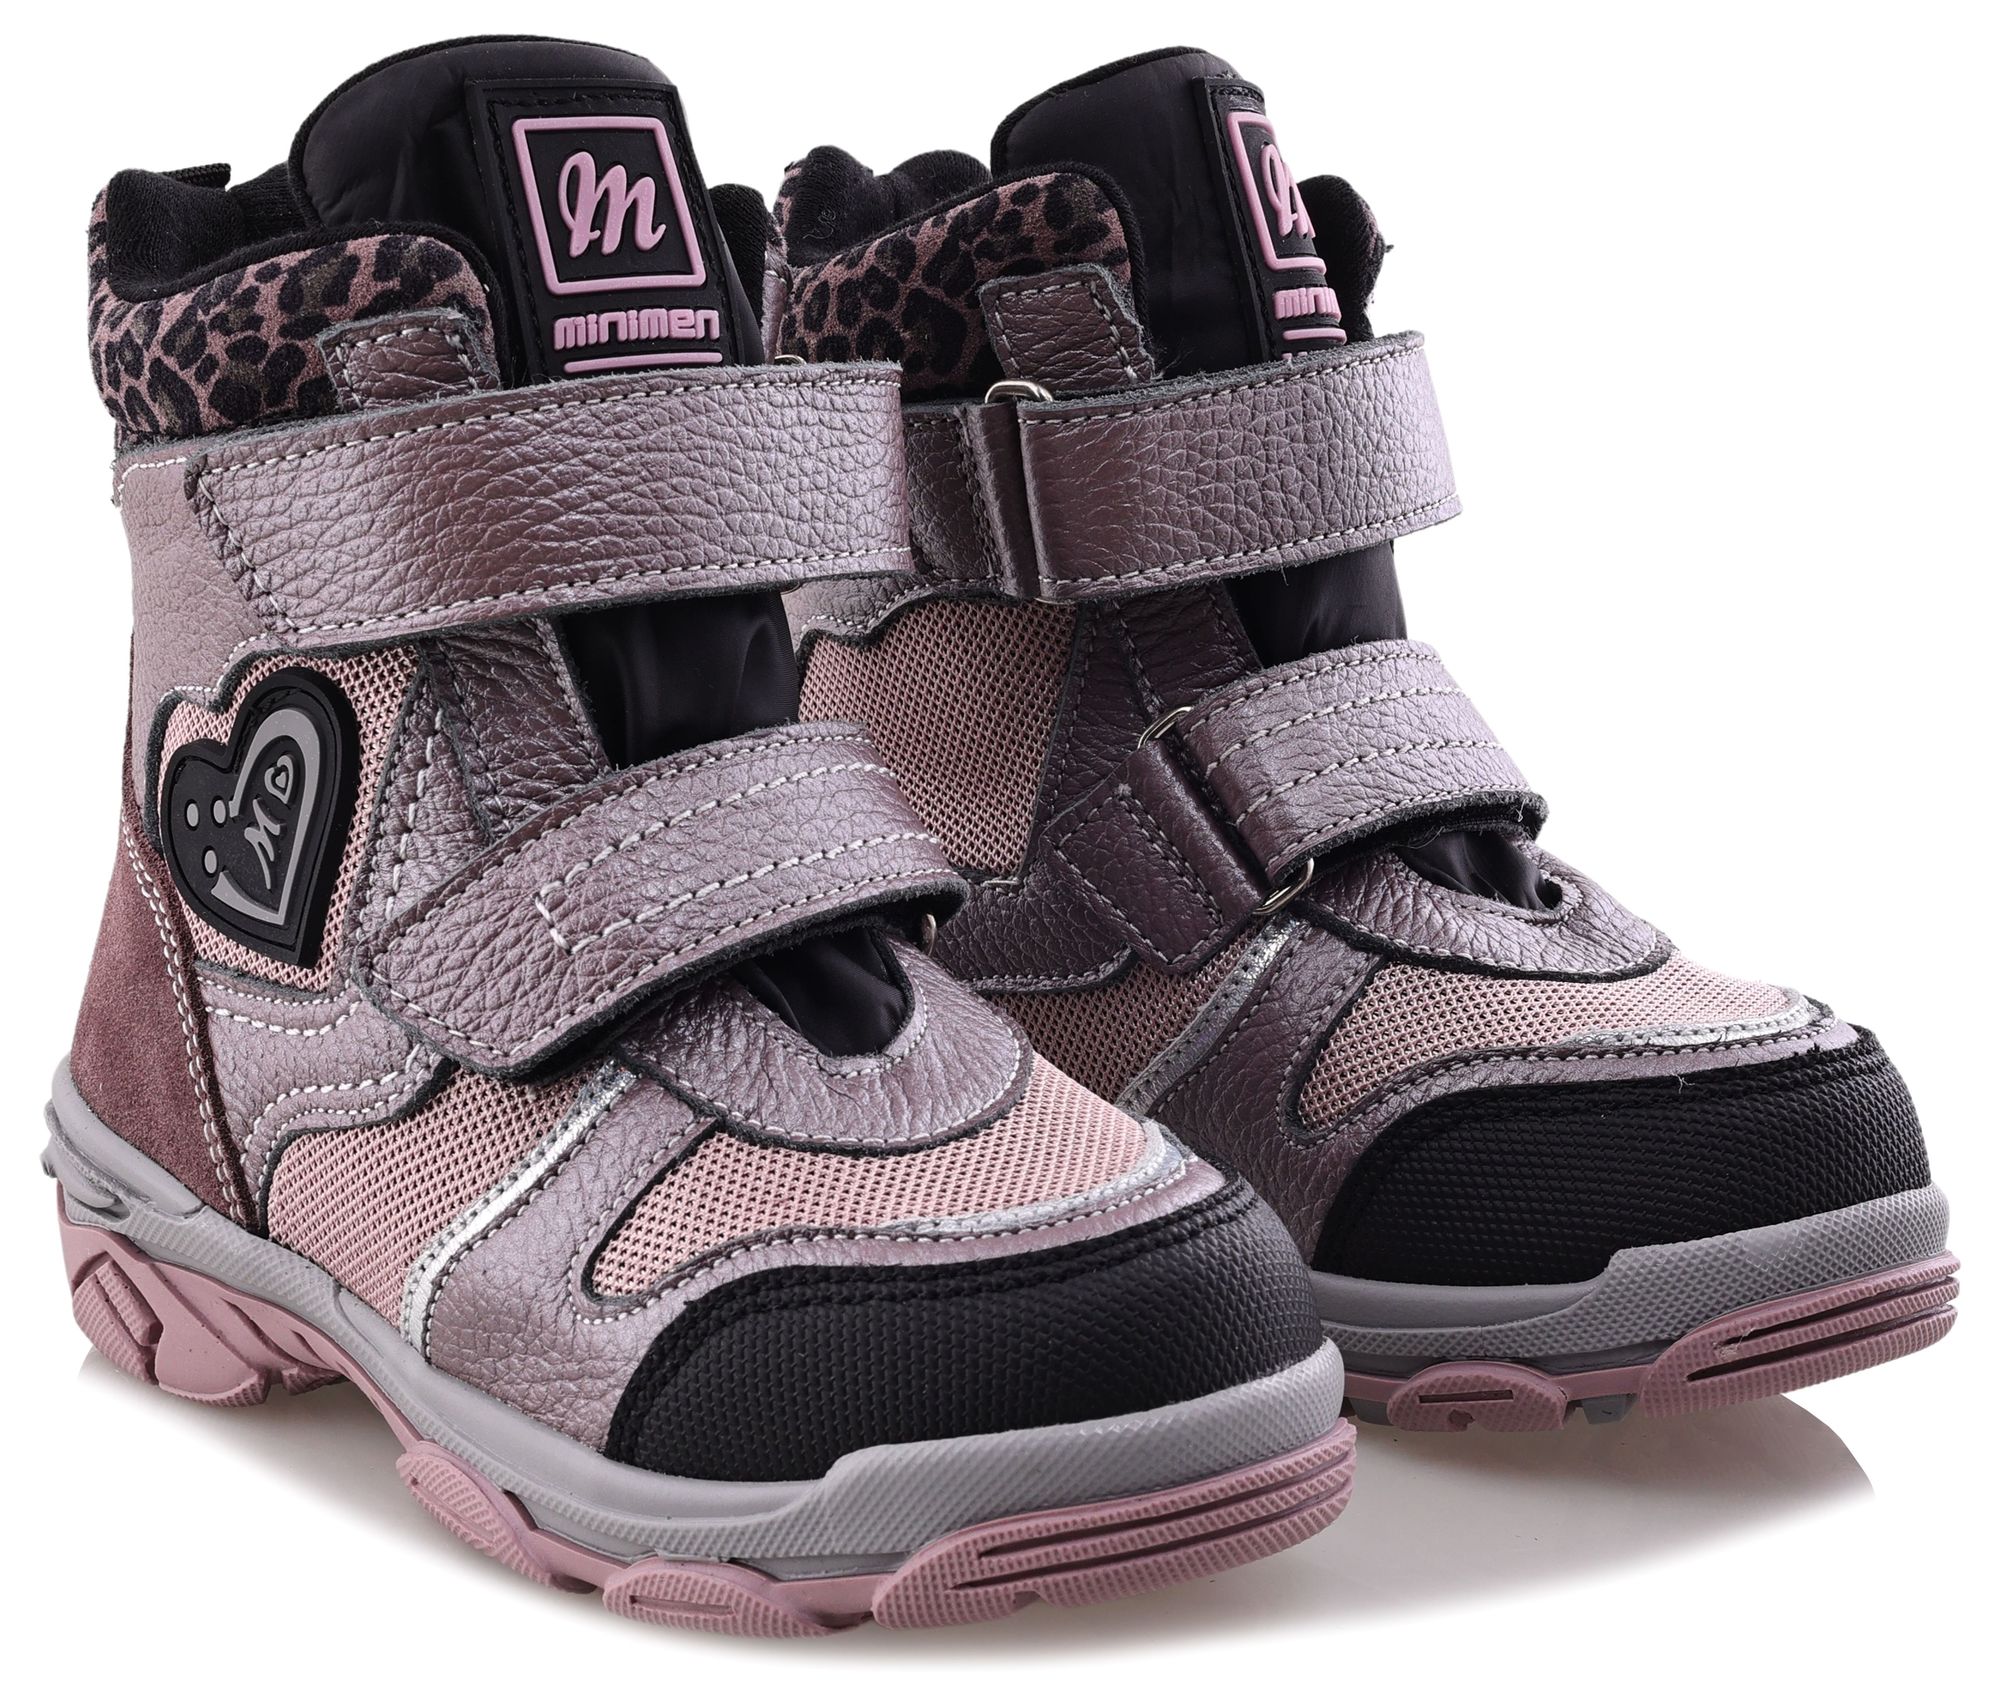 Ботинки Minimen для девочек, розовые, размер 29, 2656-53-23B-02 ботинки minimen для девочек розовые размер 28 2656 53 23b 02